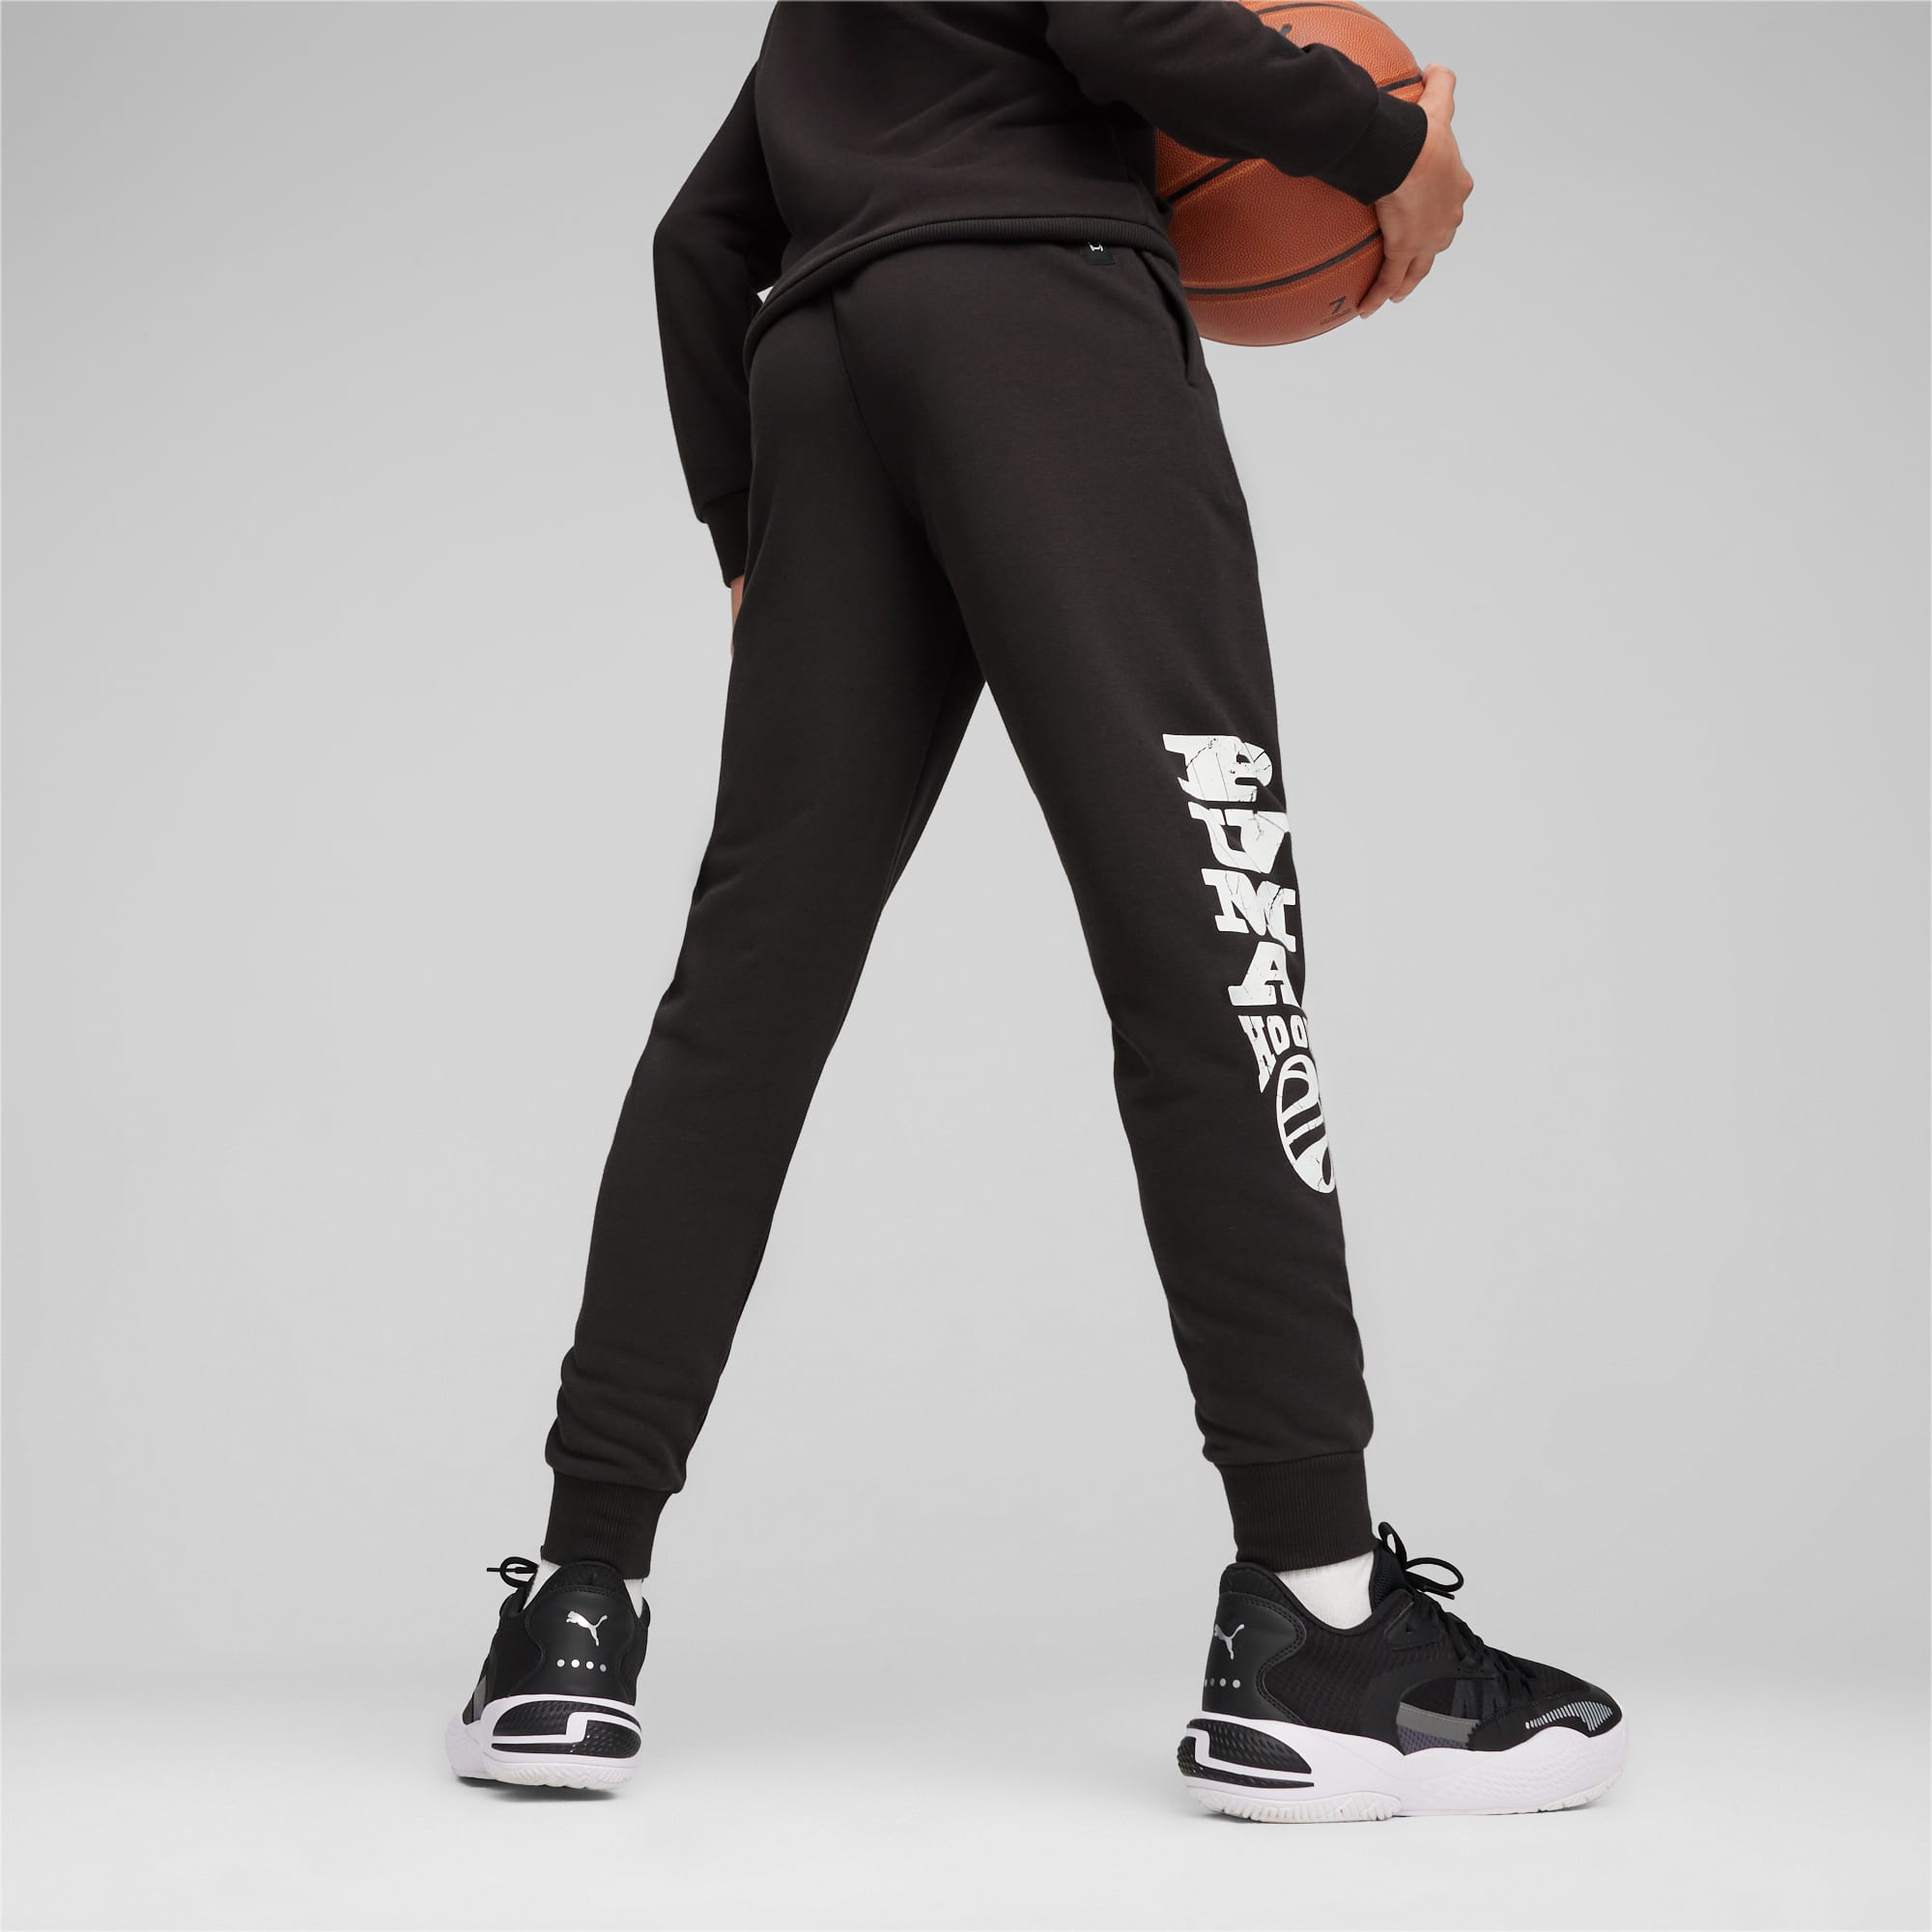 PUMA Blueprint Basketball Youth Sweatpants, Black